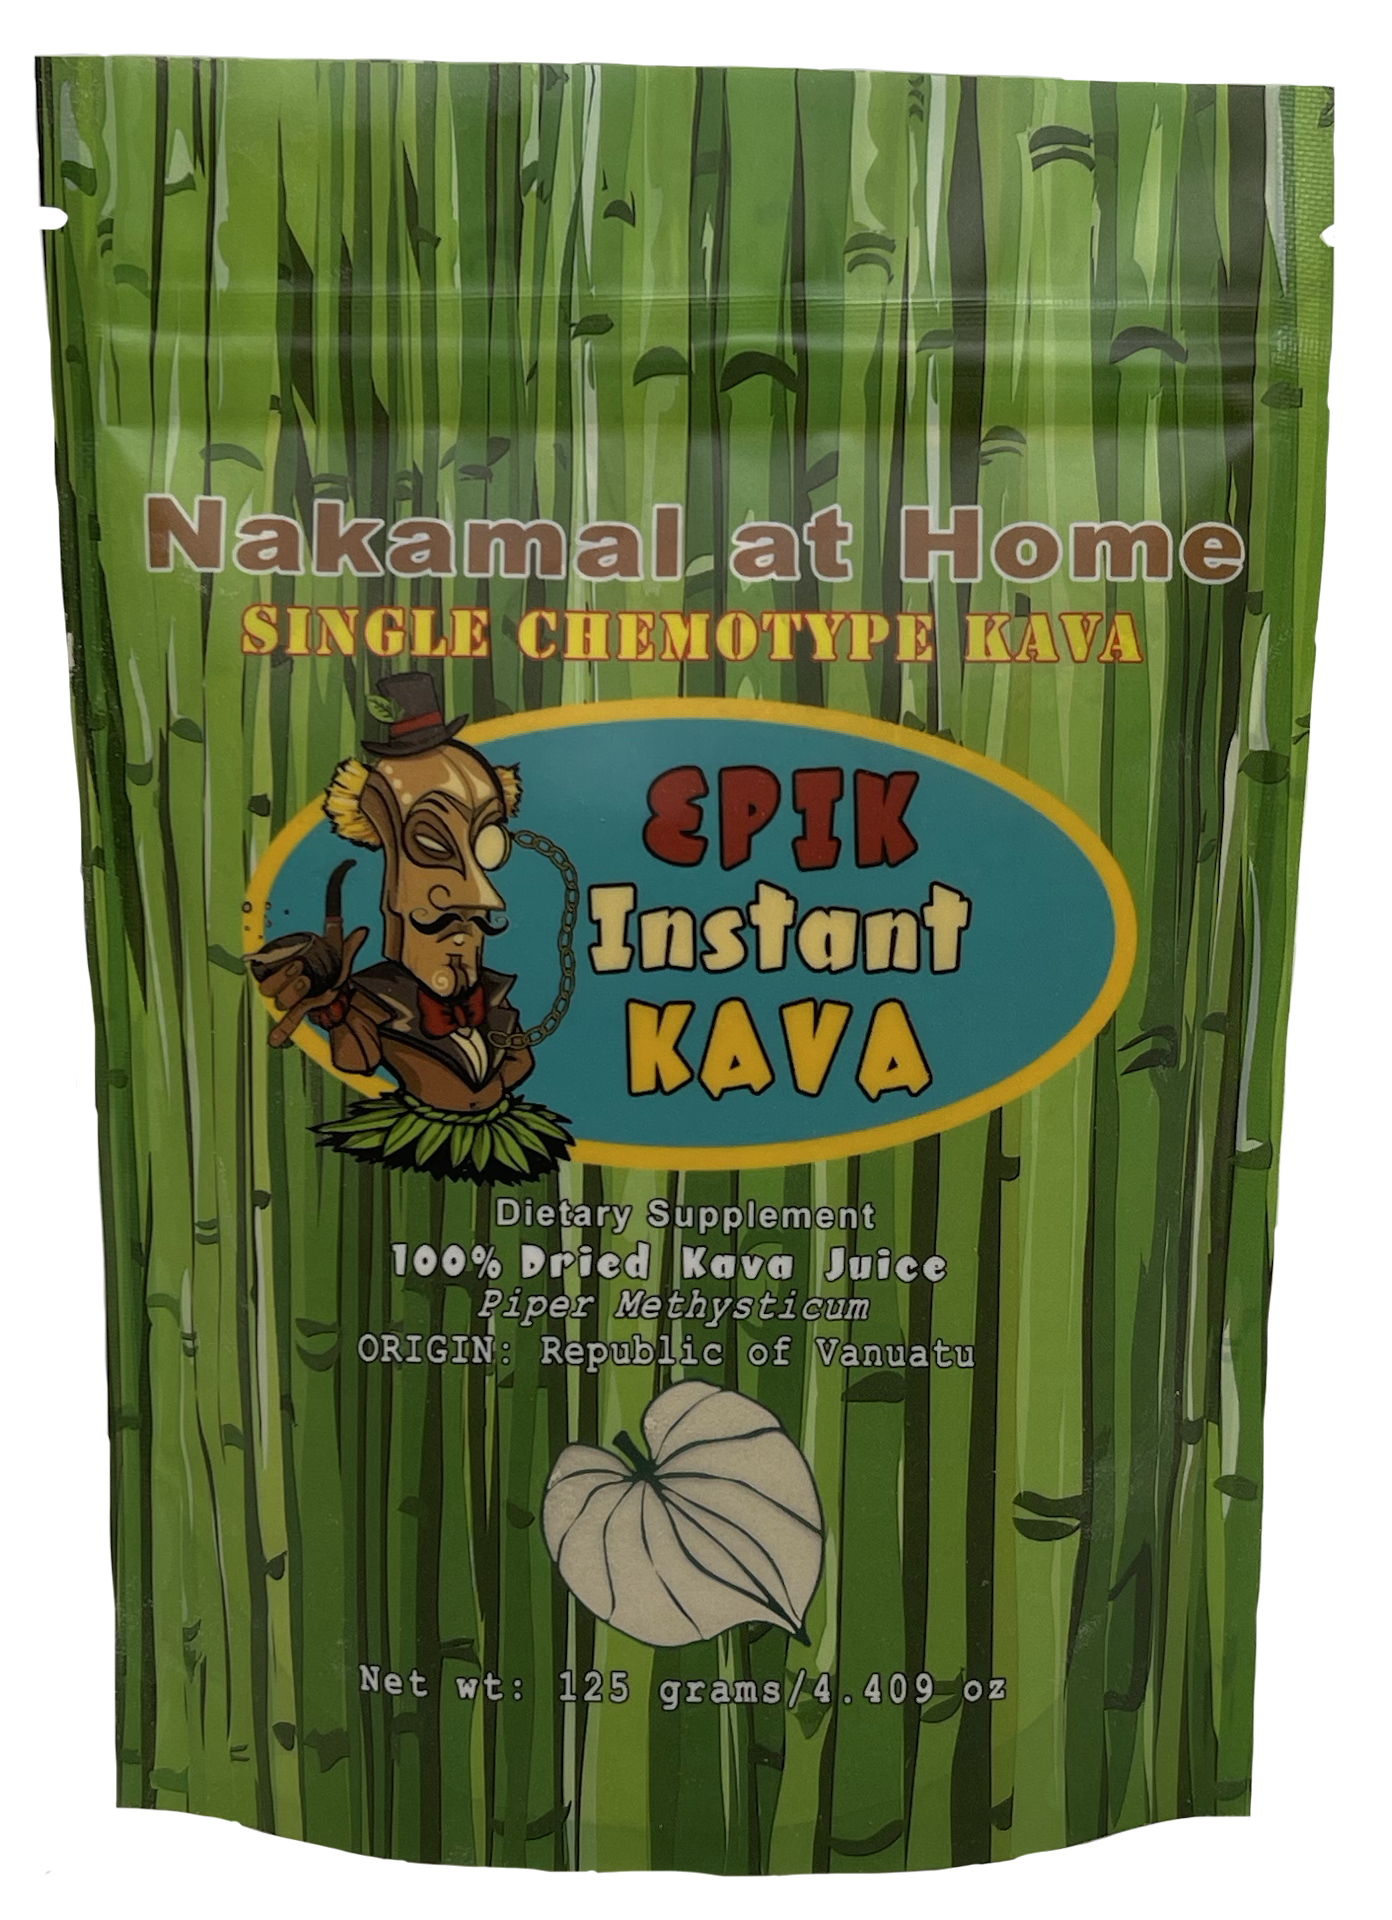 Epik Instant Kava Silesse 125 grams Nakamal At Home